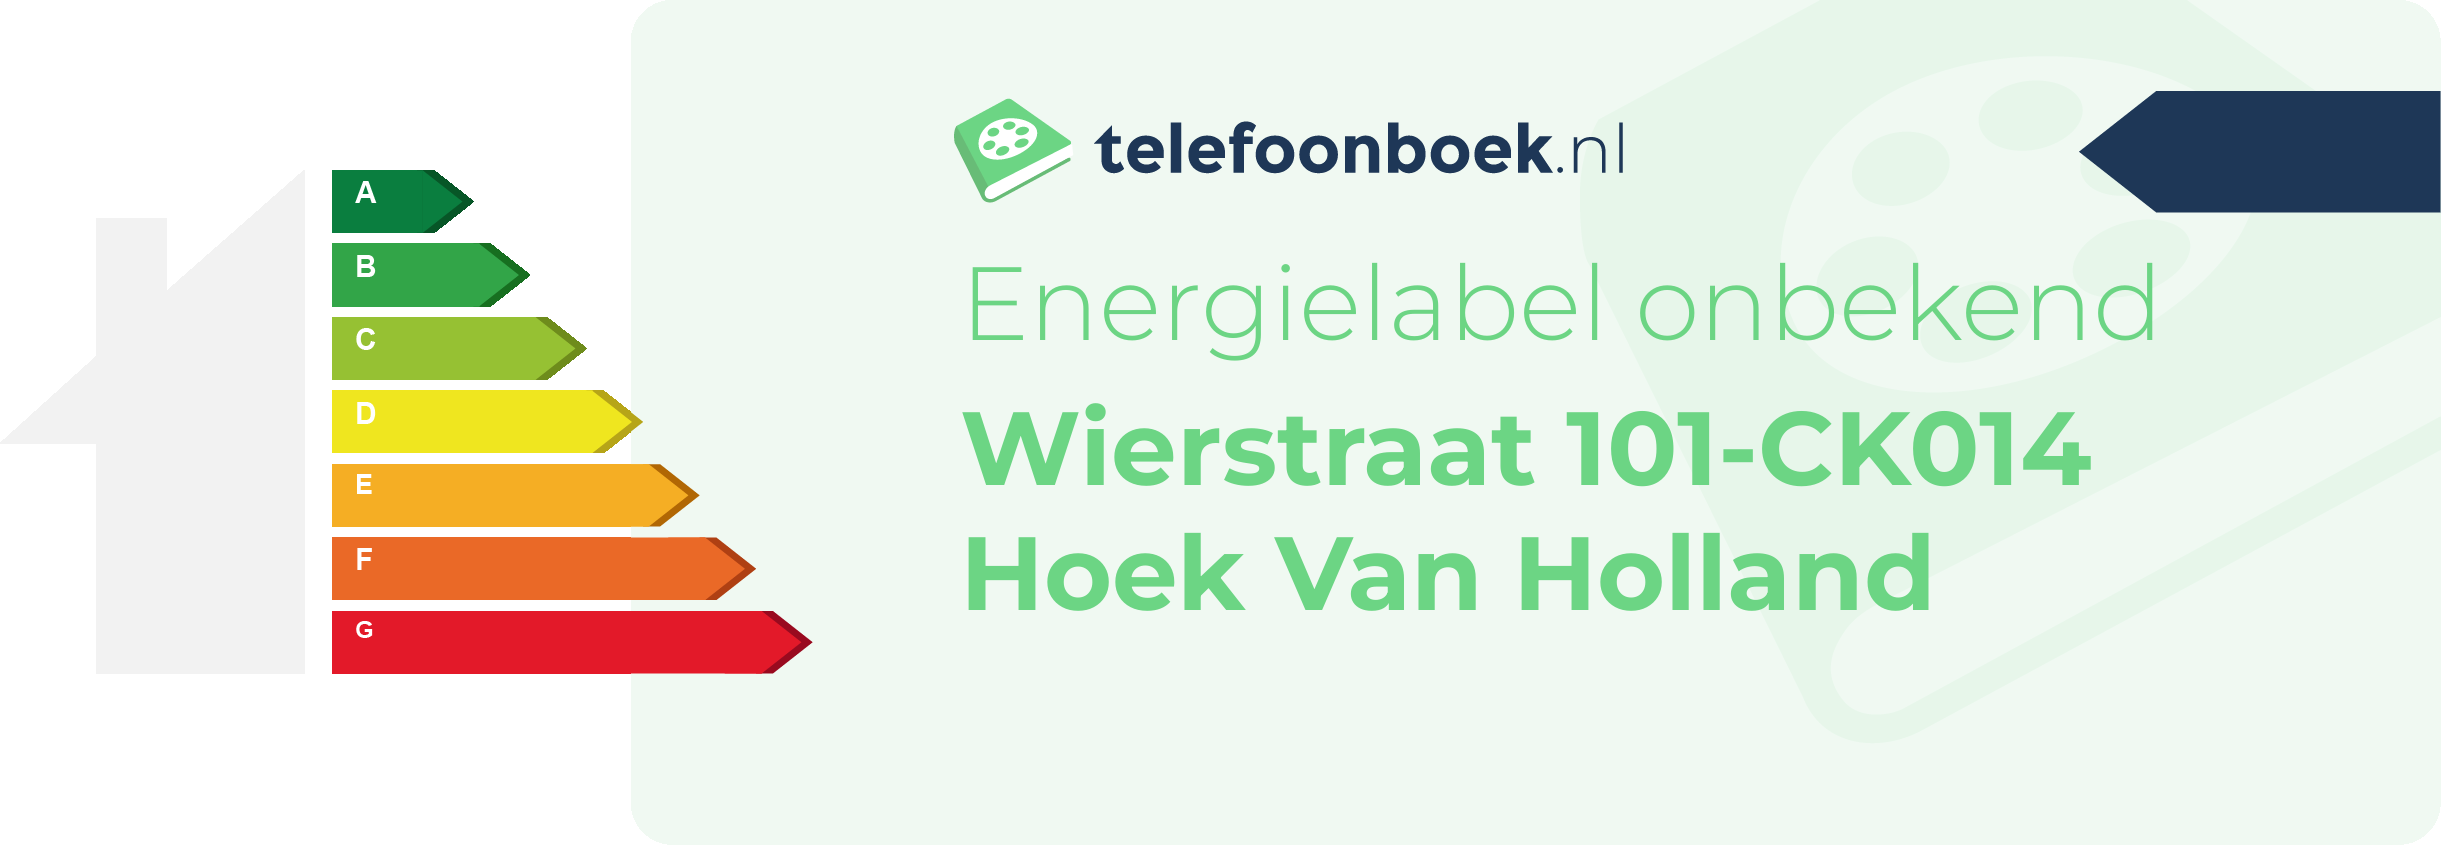 Energielabel Wierstraat 101-CK014 Hoek Van Holland